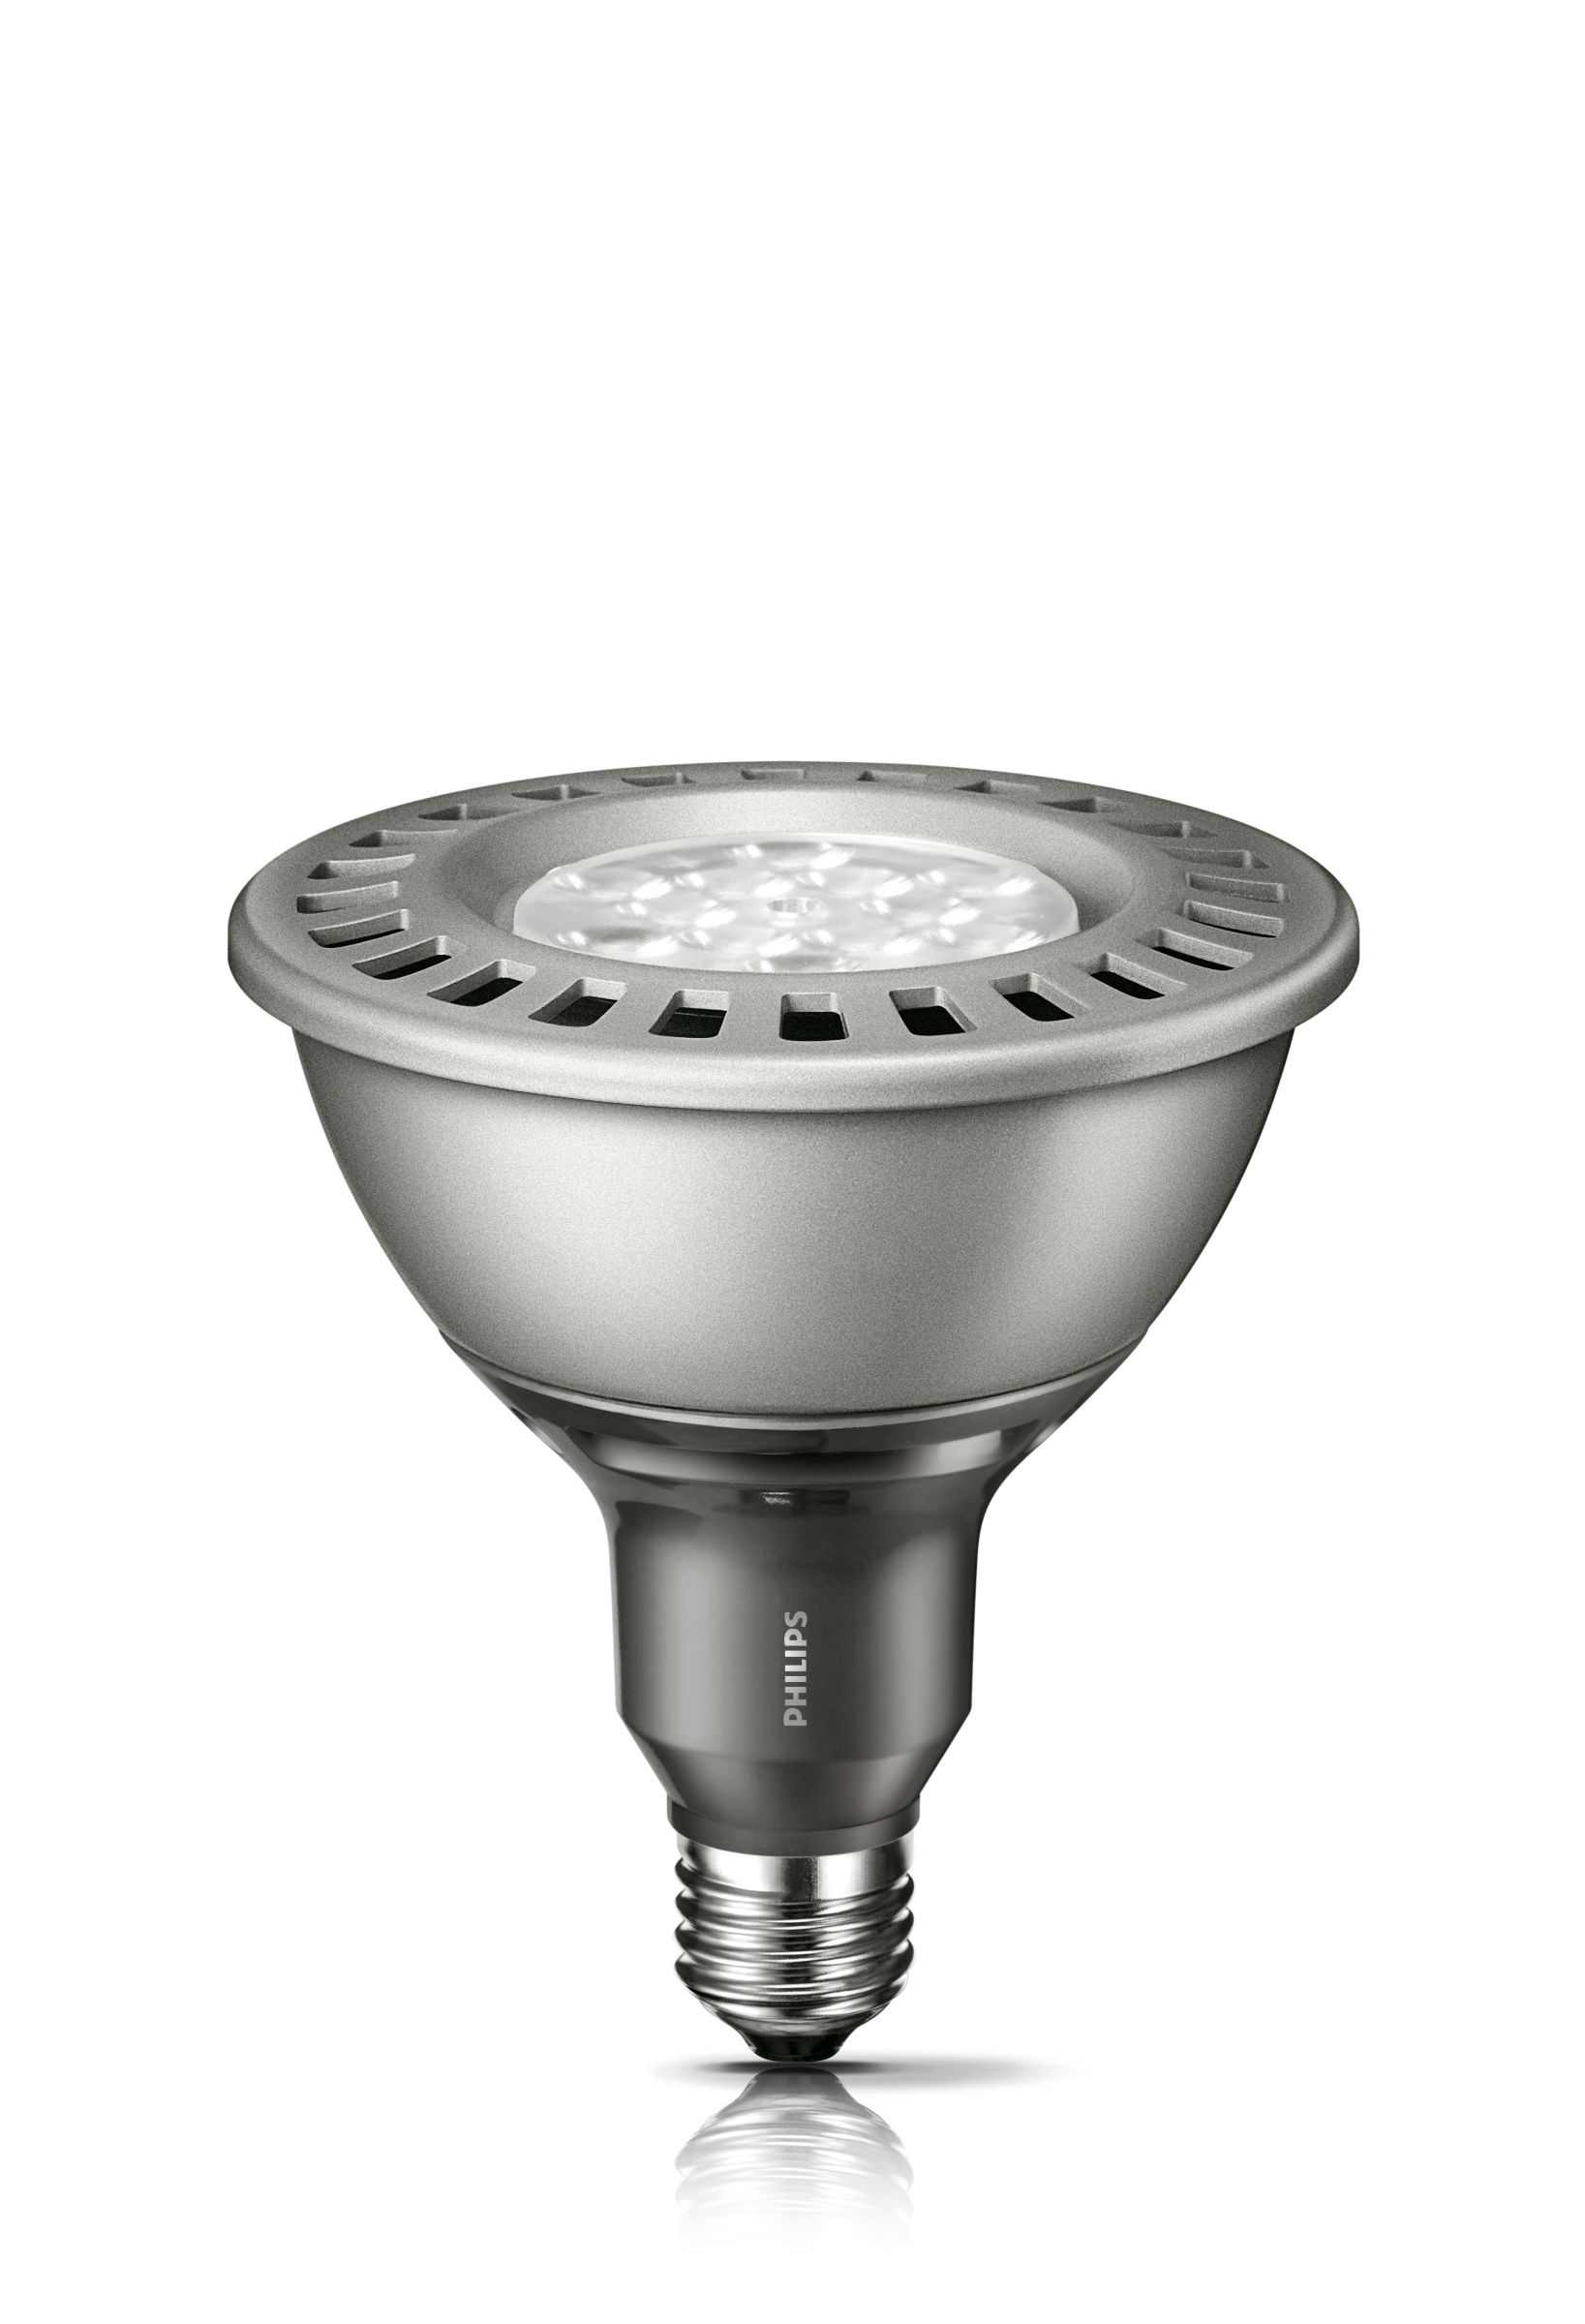 4 x Philips Master Dimmable LED PAR30 Spot Light Globes 9W 240V E27 Screw  Warm